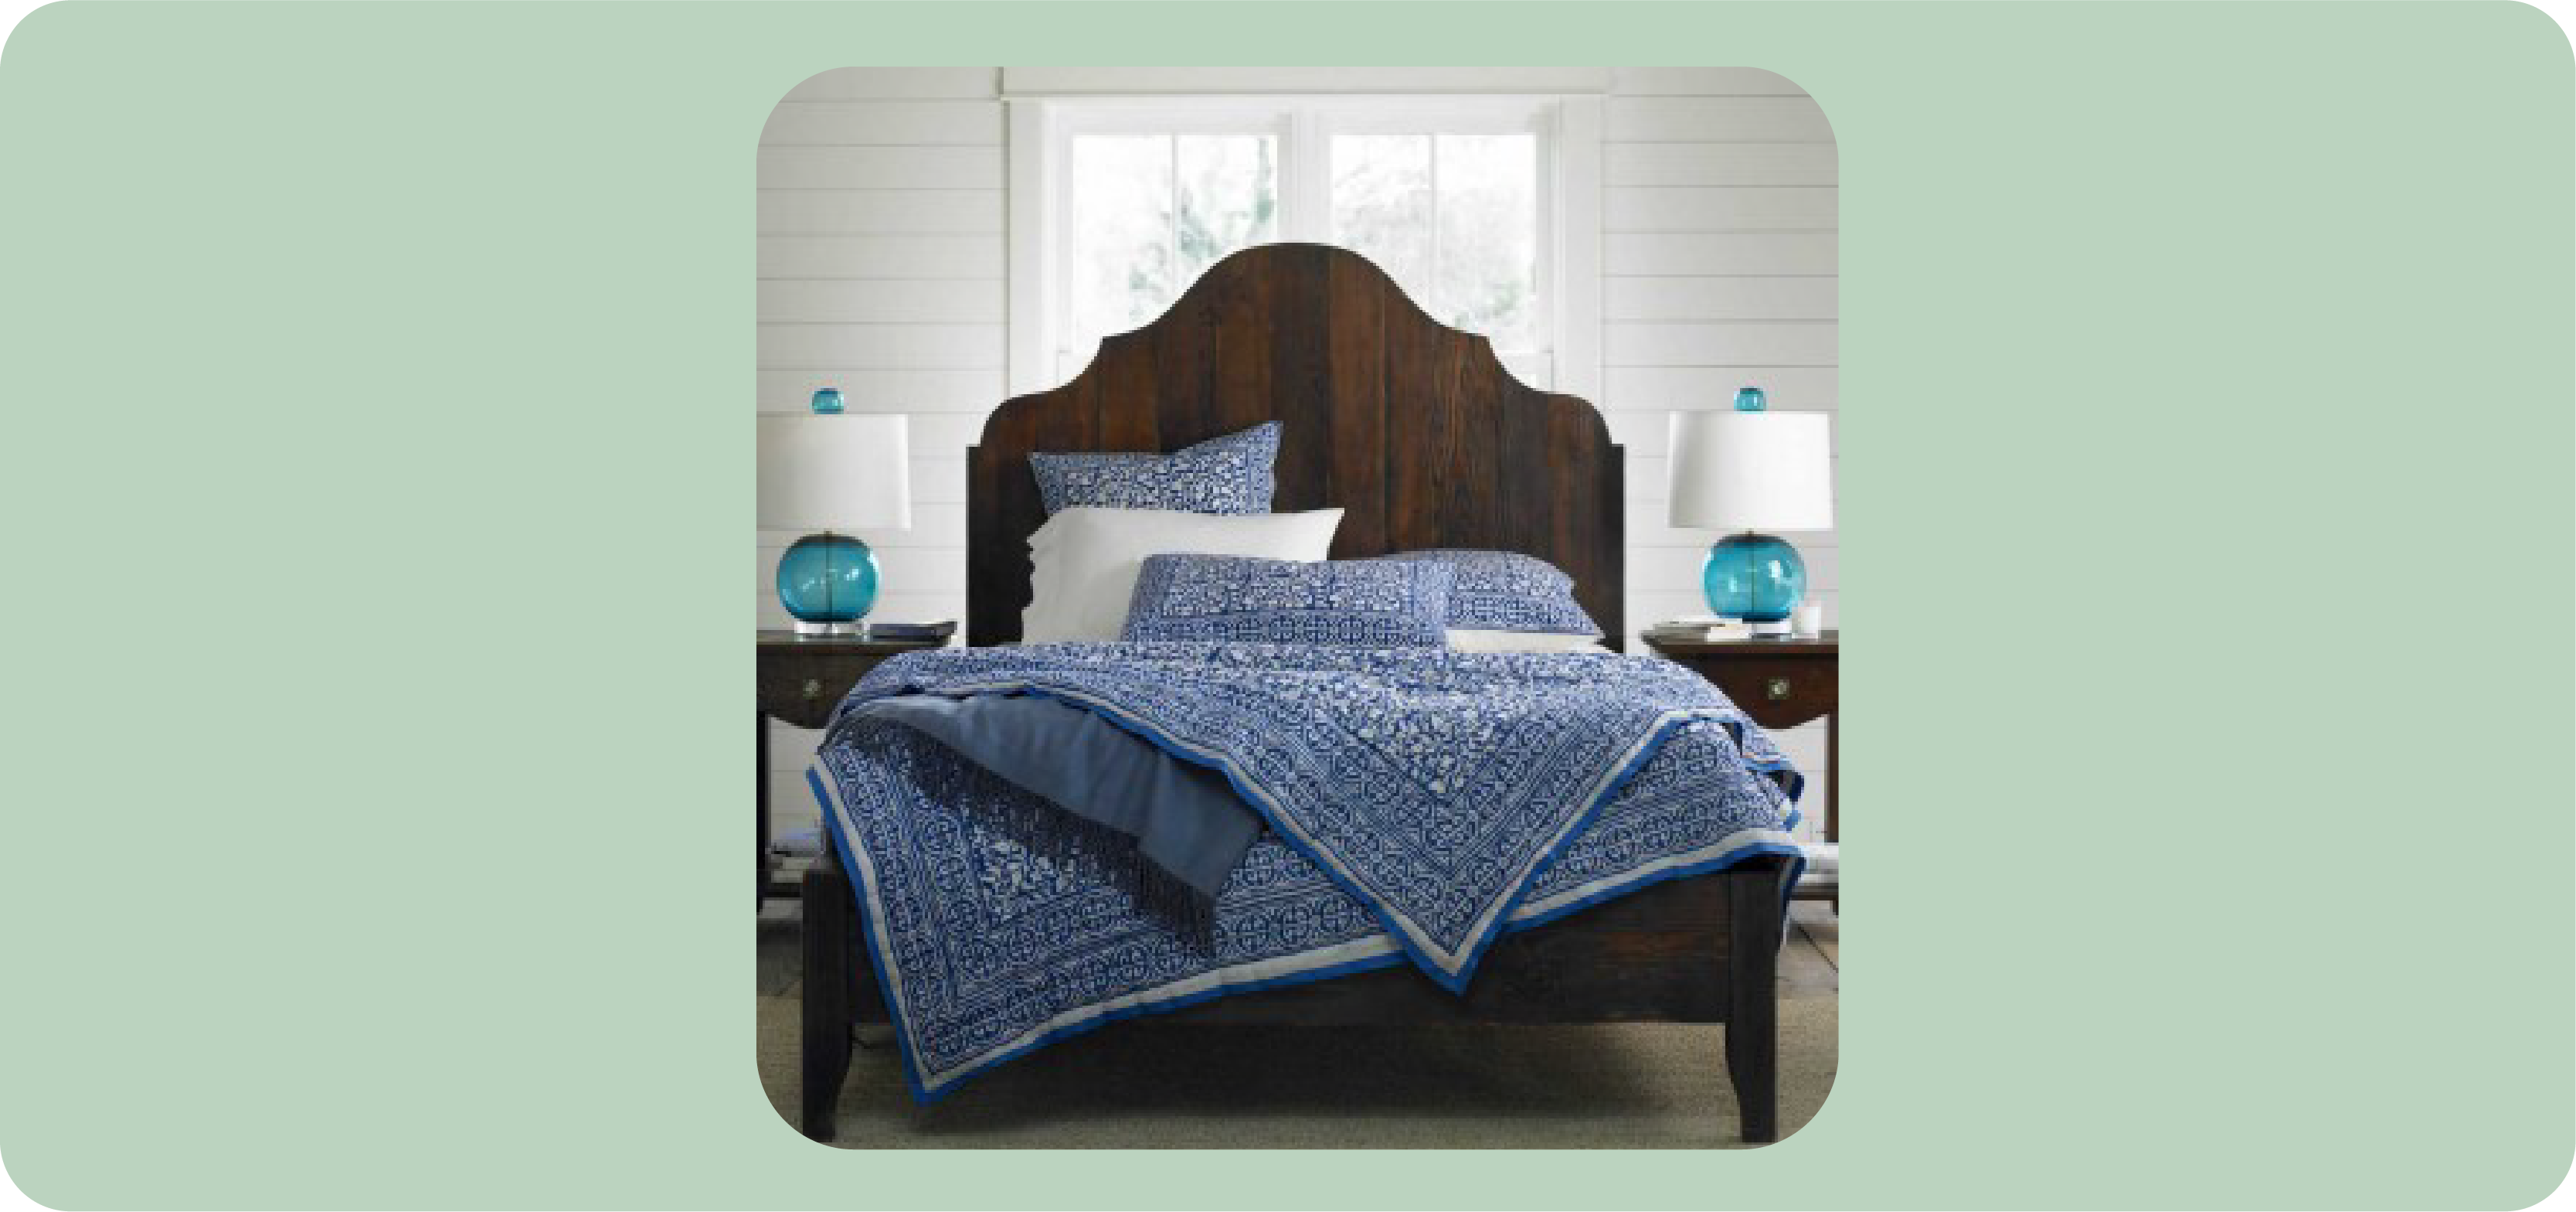 15 Free Diy Bed Frame Plans All Sizes, Wood Pallet Bed Frame Queen Diy